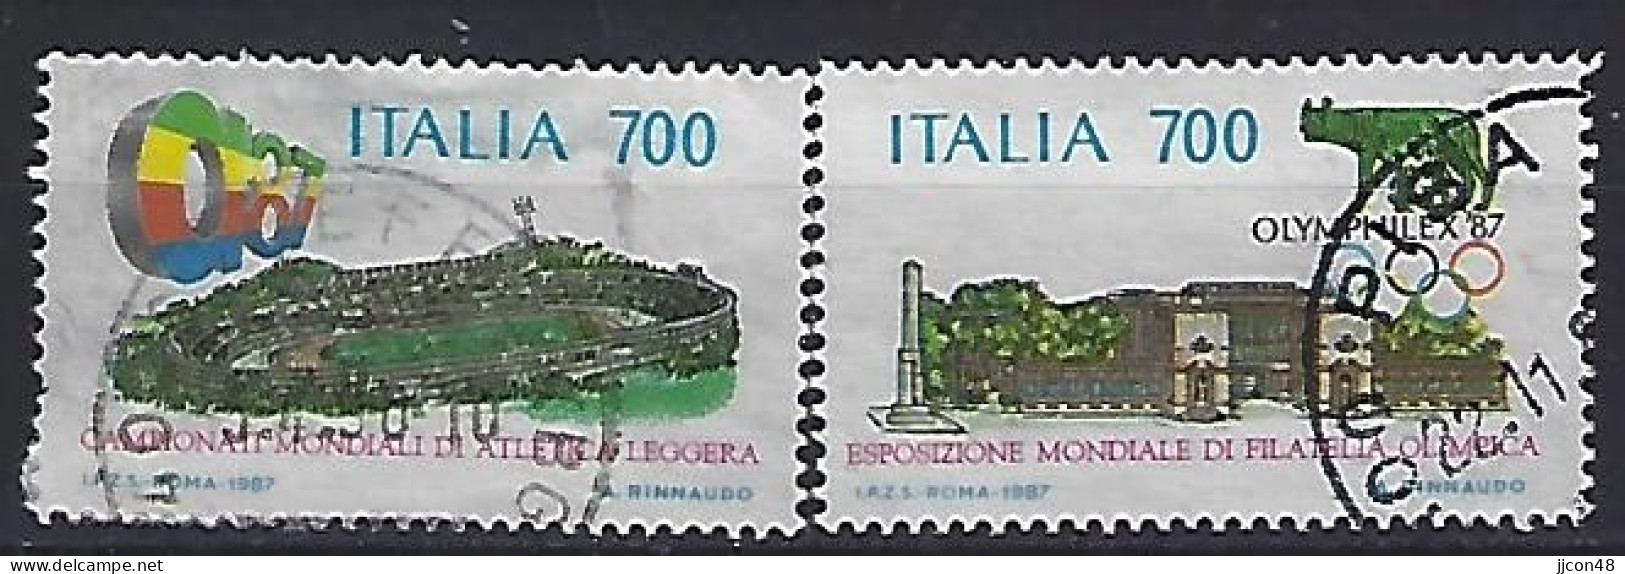 Italy 1987  Leichtathletik-Weltmeisterschaften + "OLYMPHILEX¬87"  (o) Mi.2019-2020 - 1981-90: Used